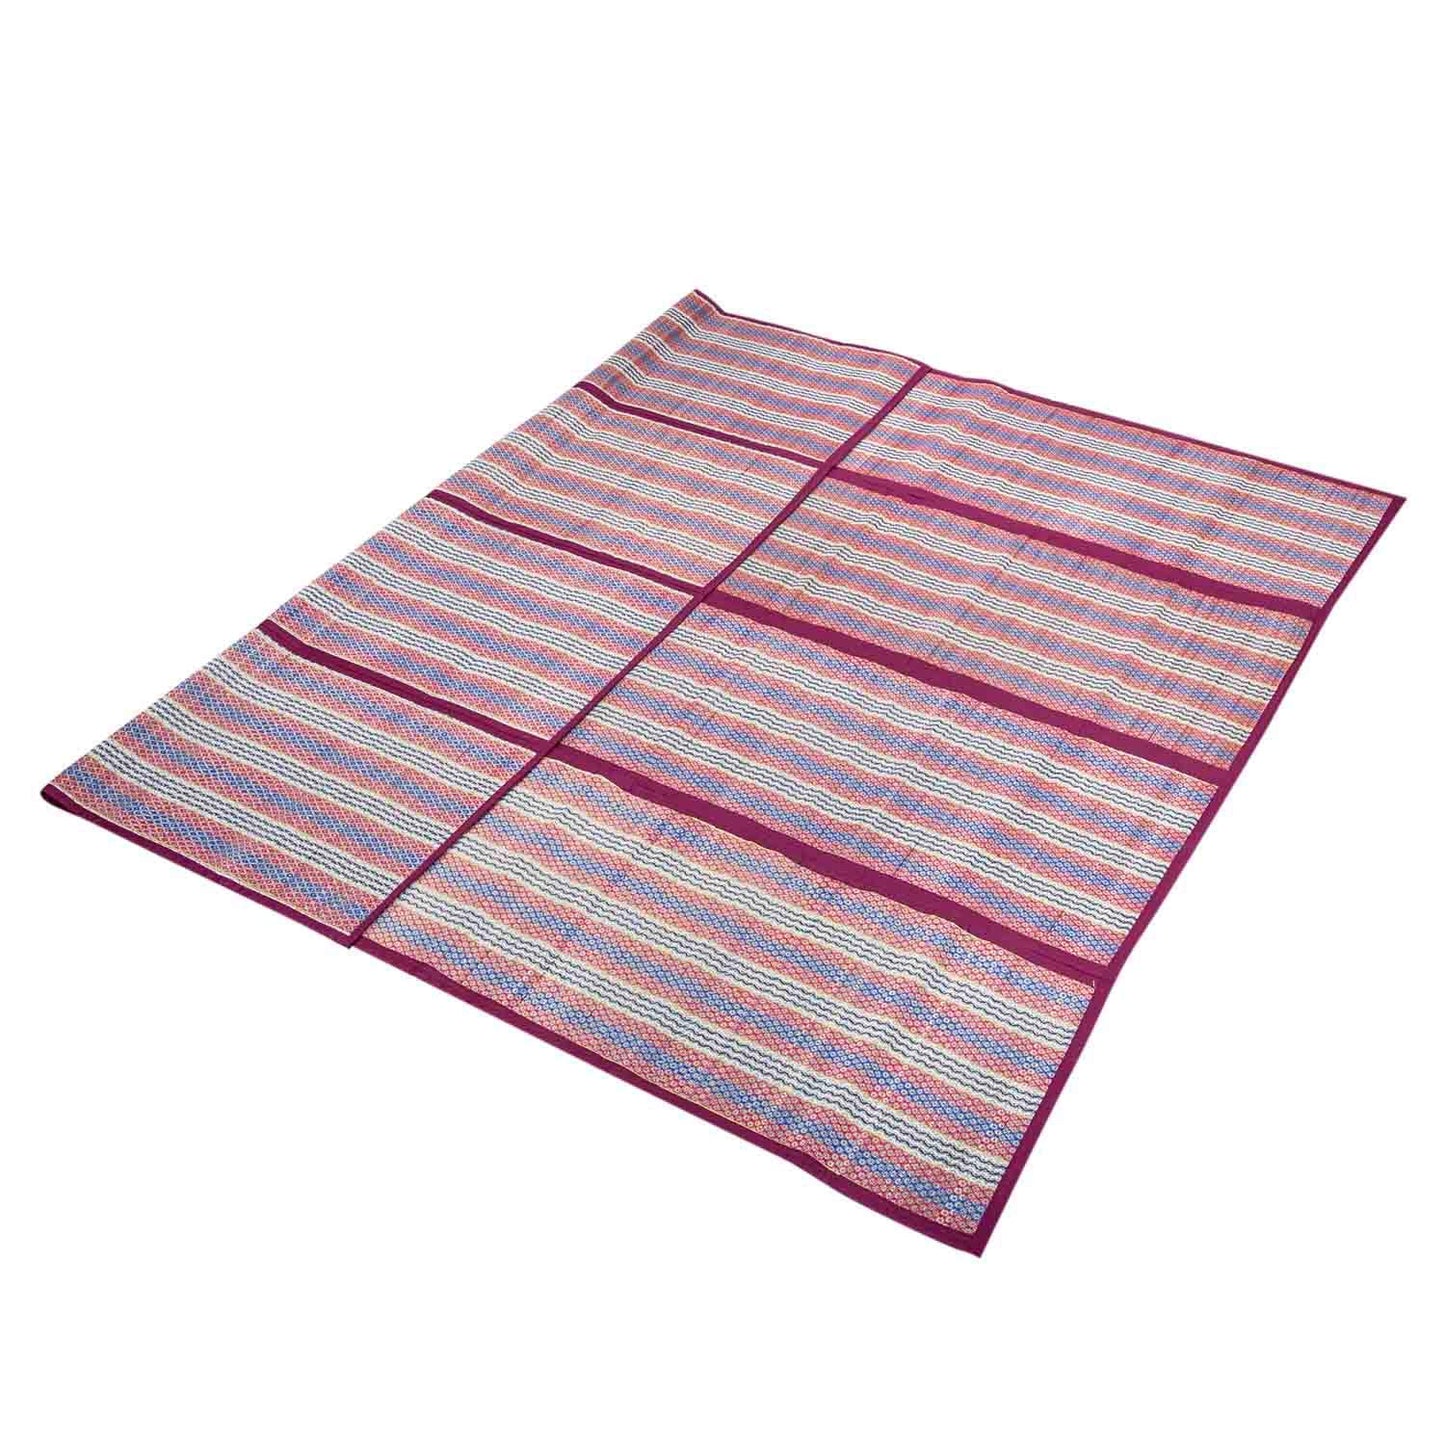 Chatai  Floor Mat Foldable handwoven Organic made of Madurkathi Grass for Sleeping, Sitting on Floor - T3-43